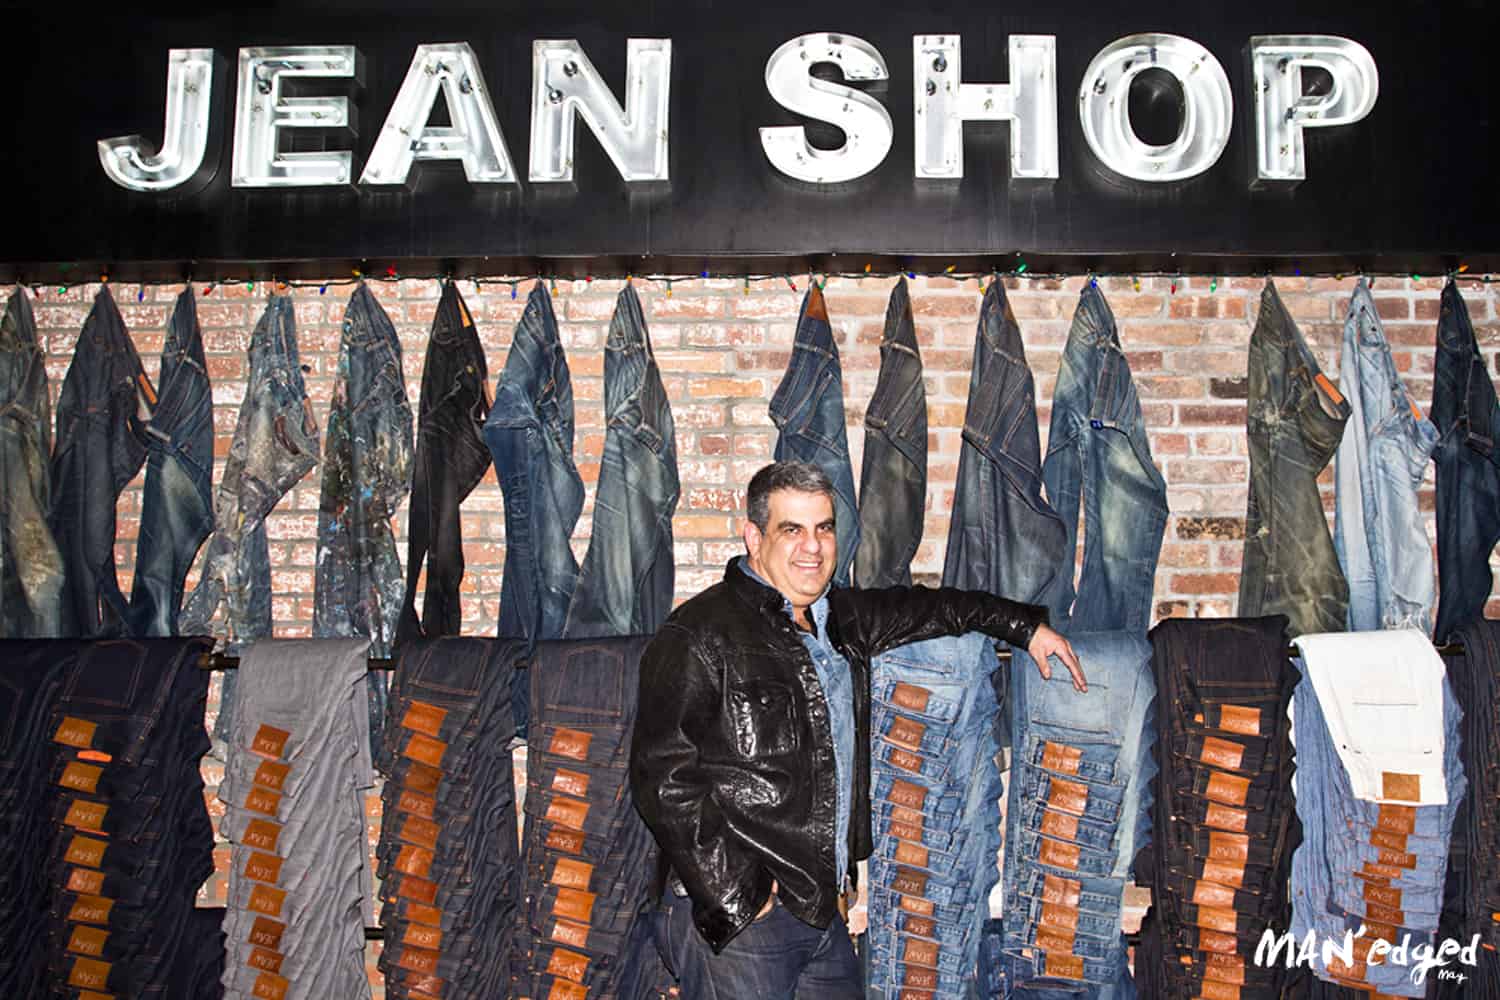 Men's denim guru and founder of Jean Shop, Eric Goldstein, poses inside denim store in SOHO